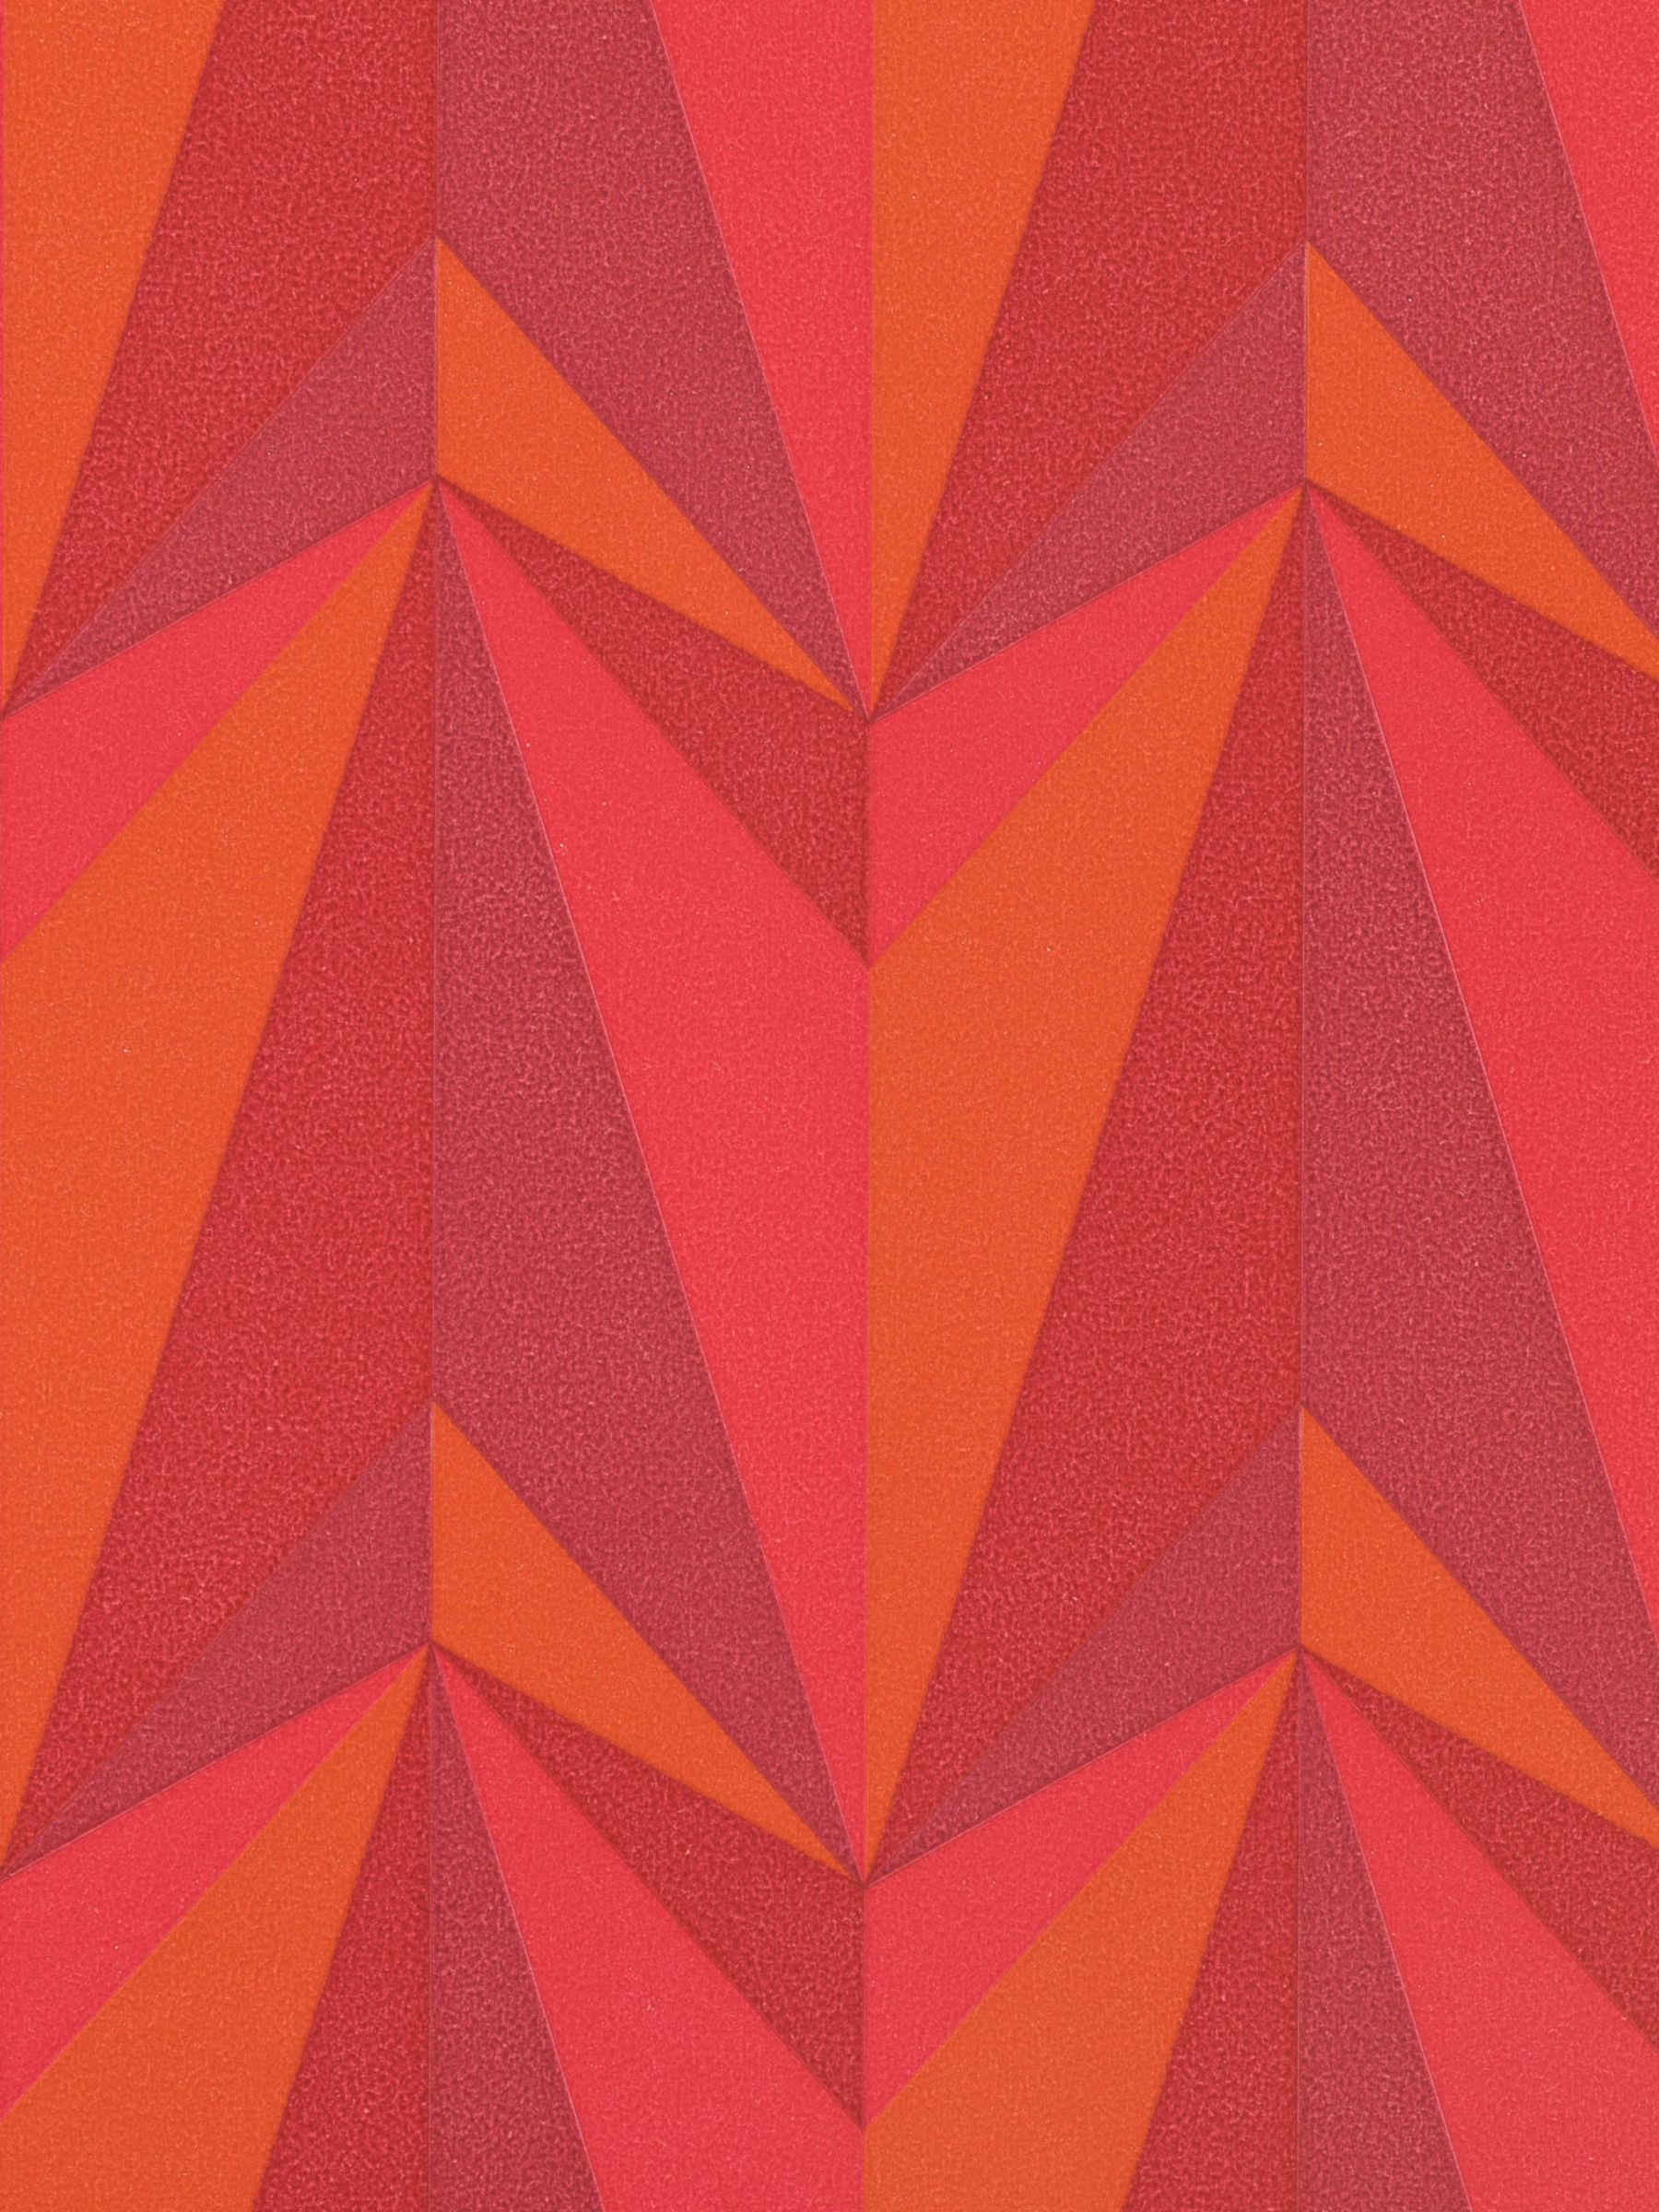 range wallpaper designs,orange,pattern,red,triangle,design